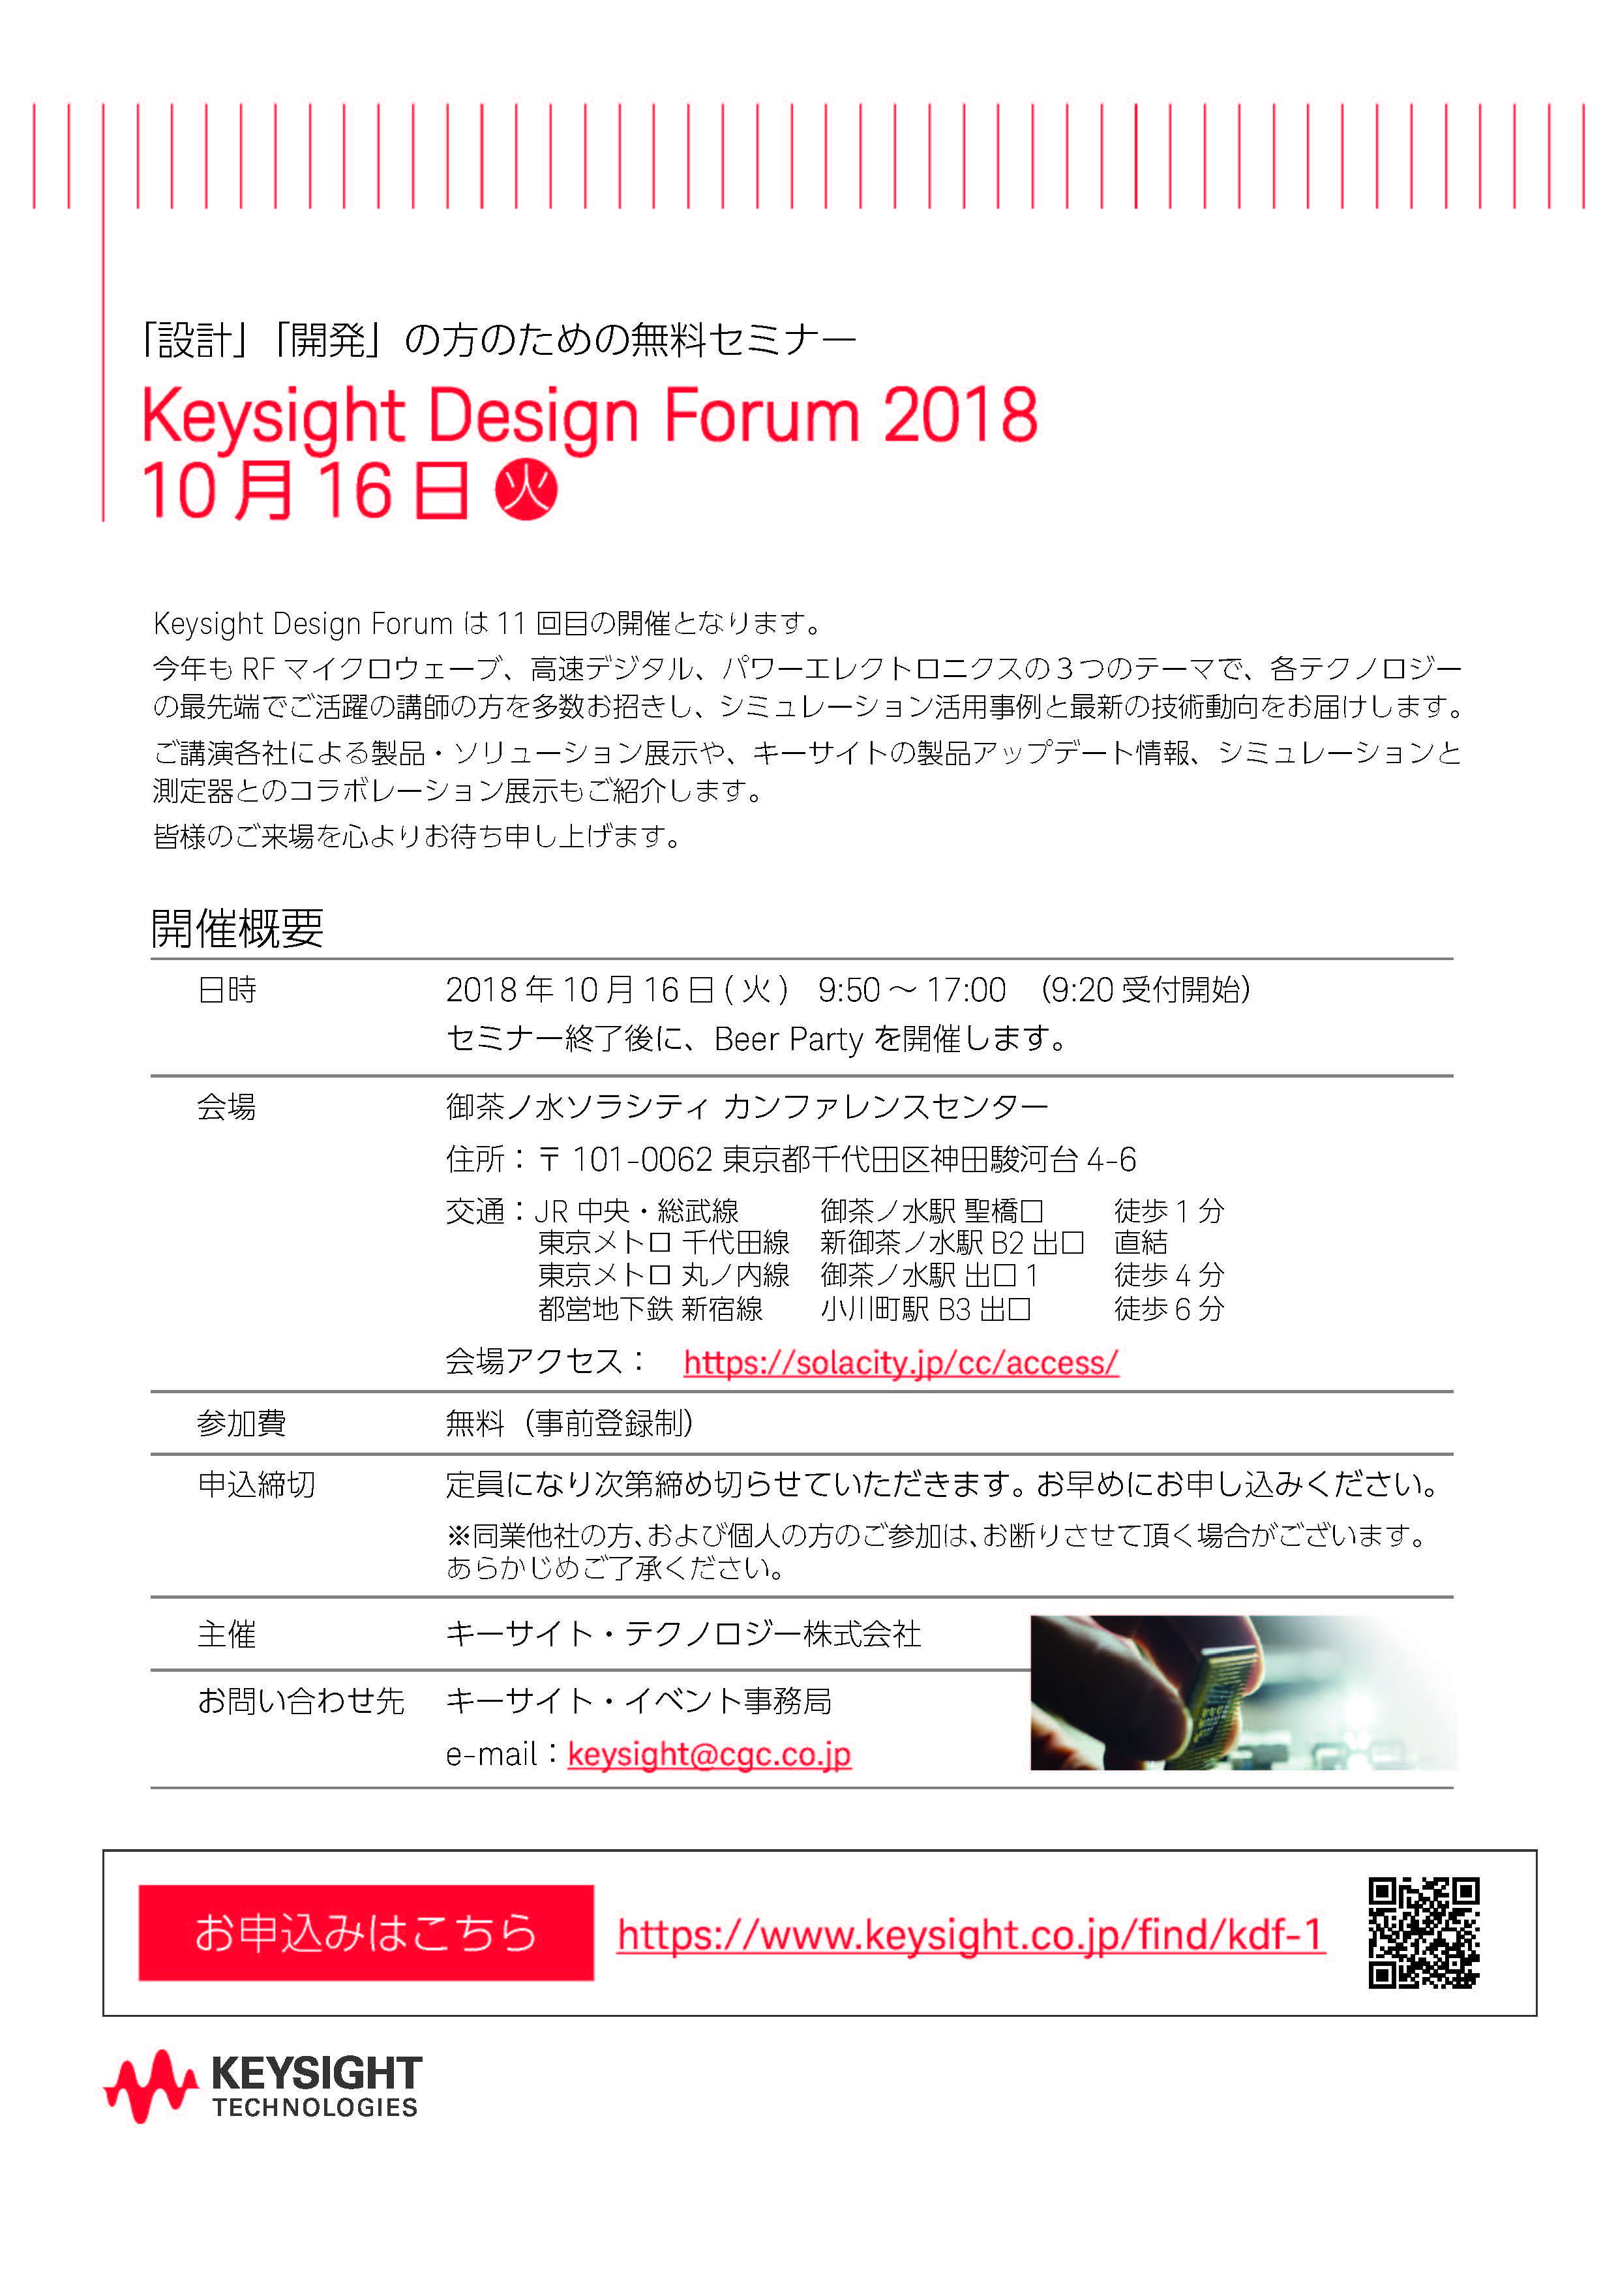 Keysight Design Forum2018出展